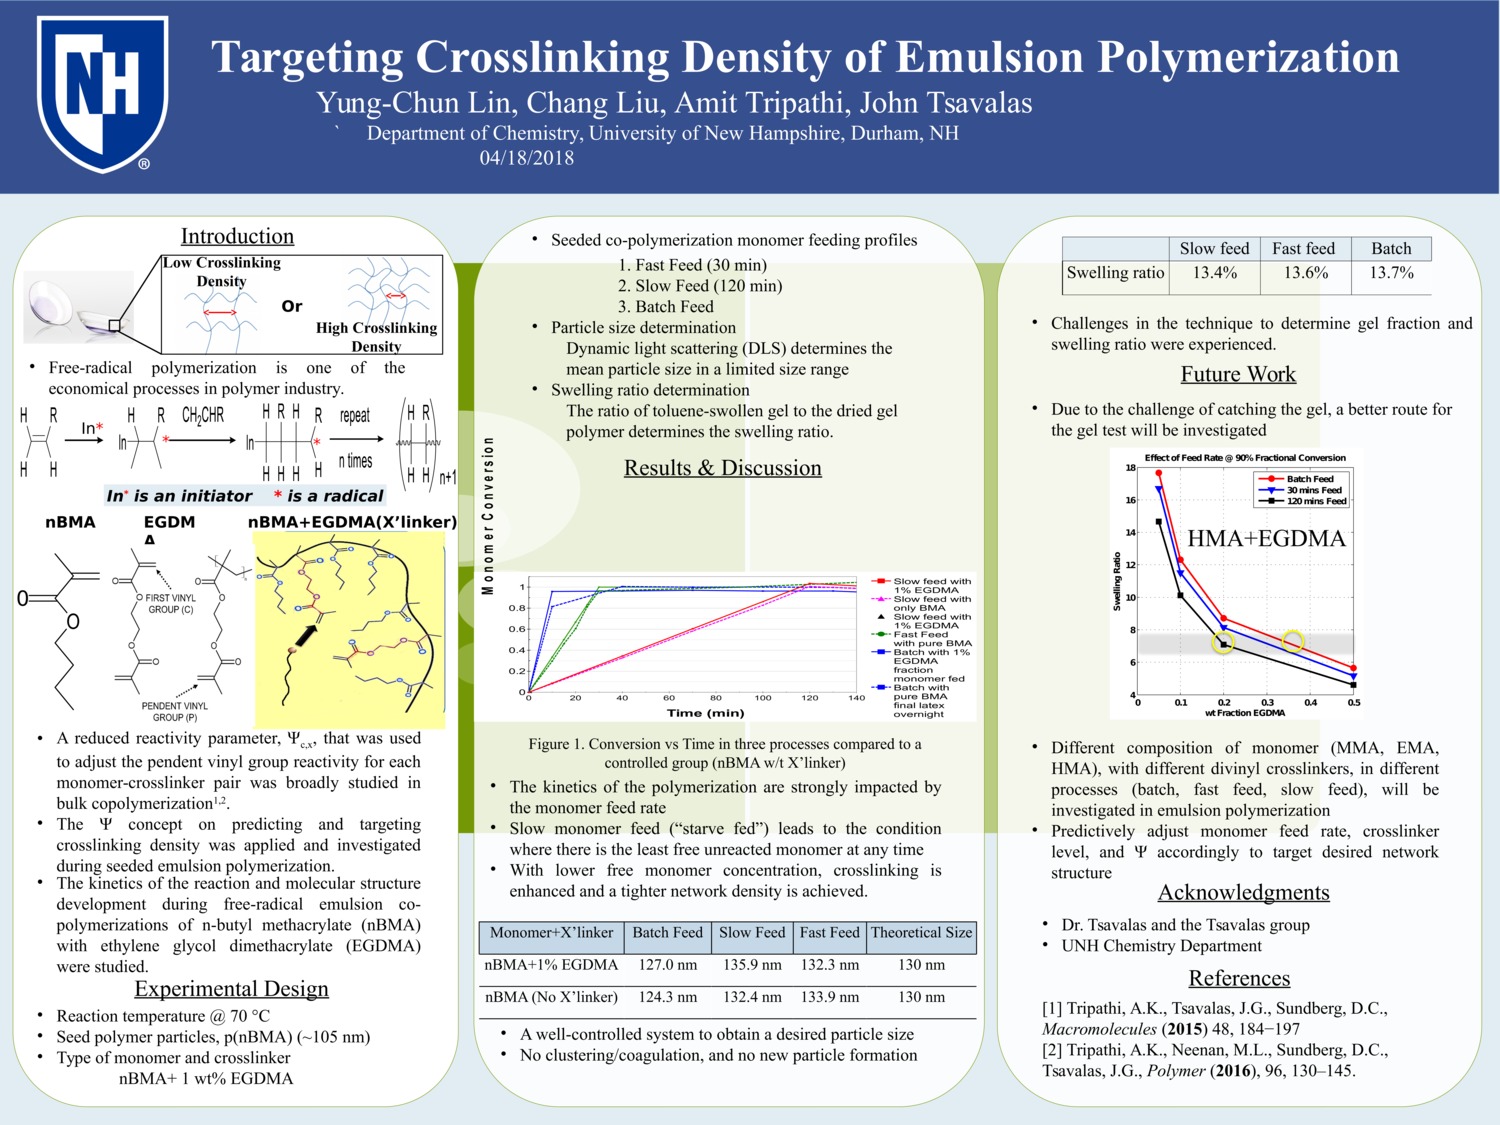 Targeting Crosslinking Density In Emulsion Polymerization by yl1062